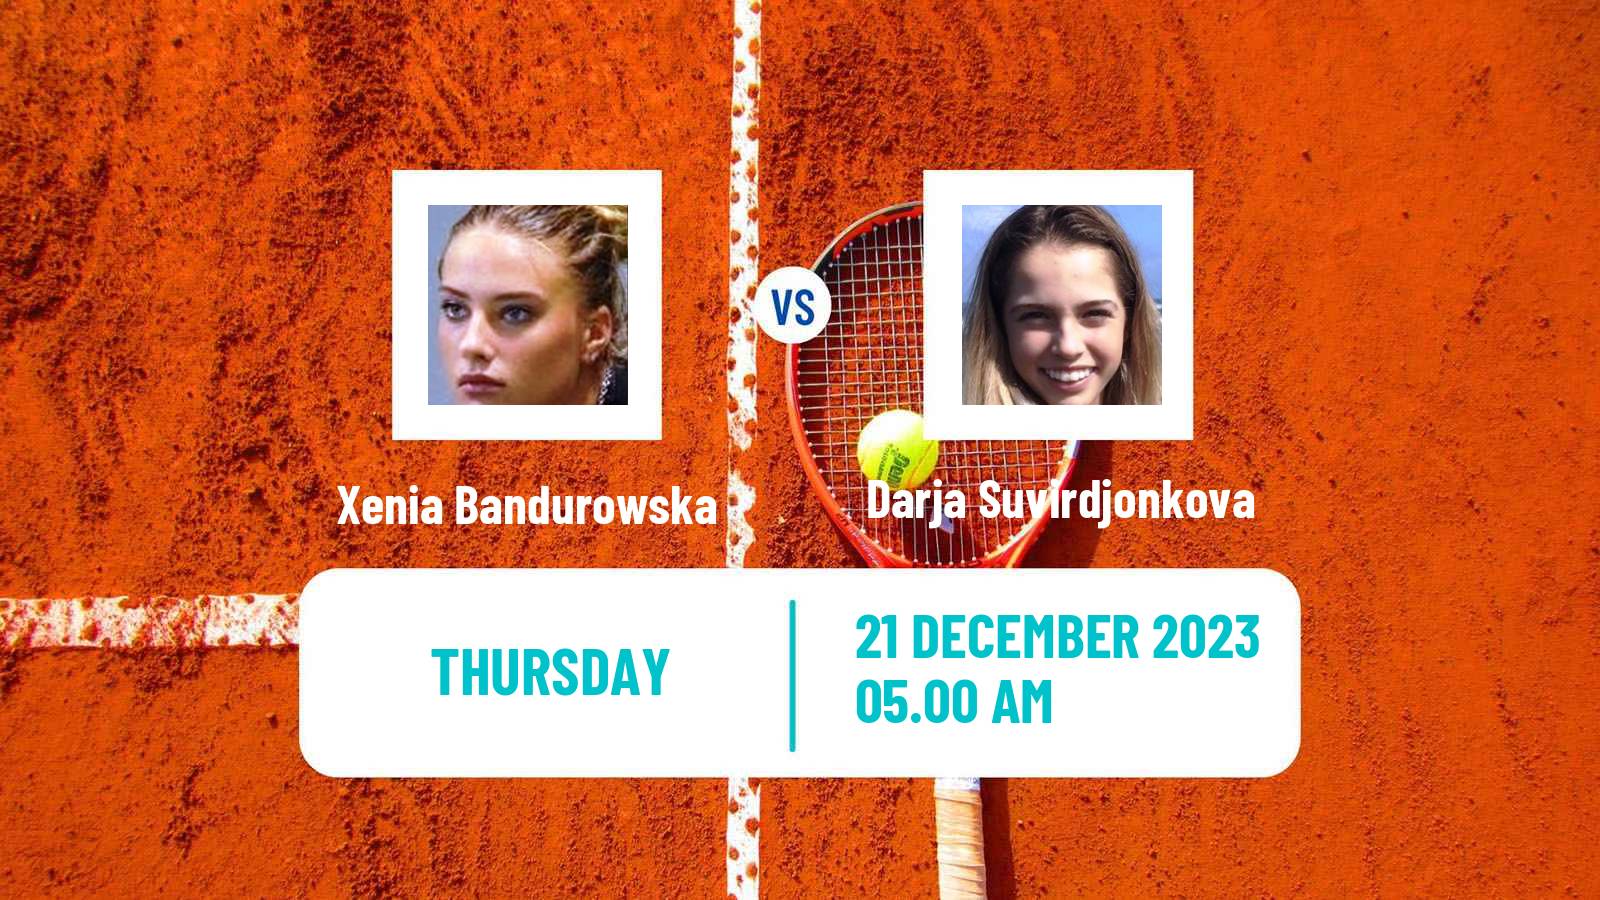 Tennis ITF W15 Monastir 43 Women Xenia Bandurowska - Darja Suvirdjonkova